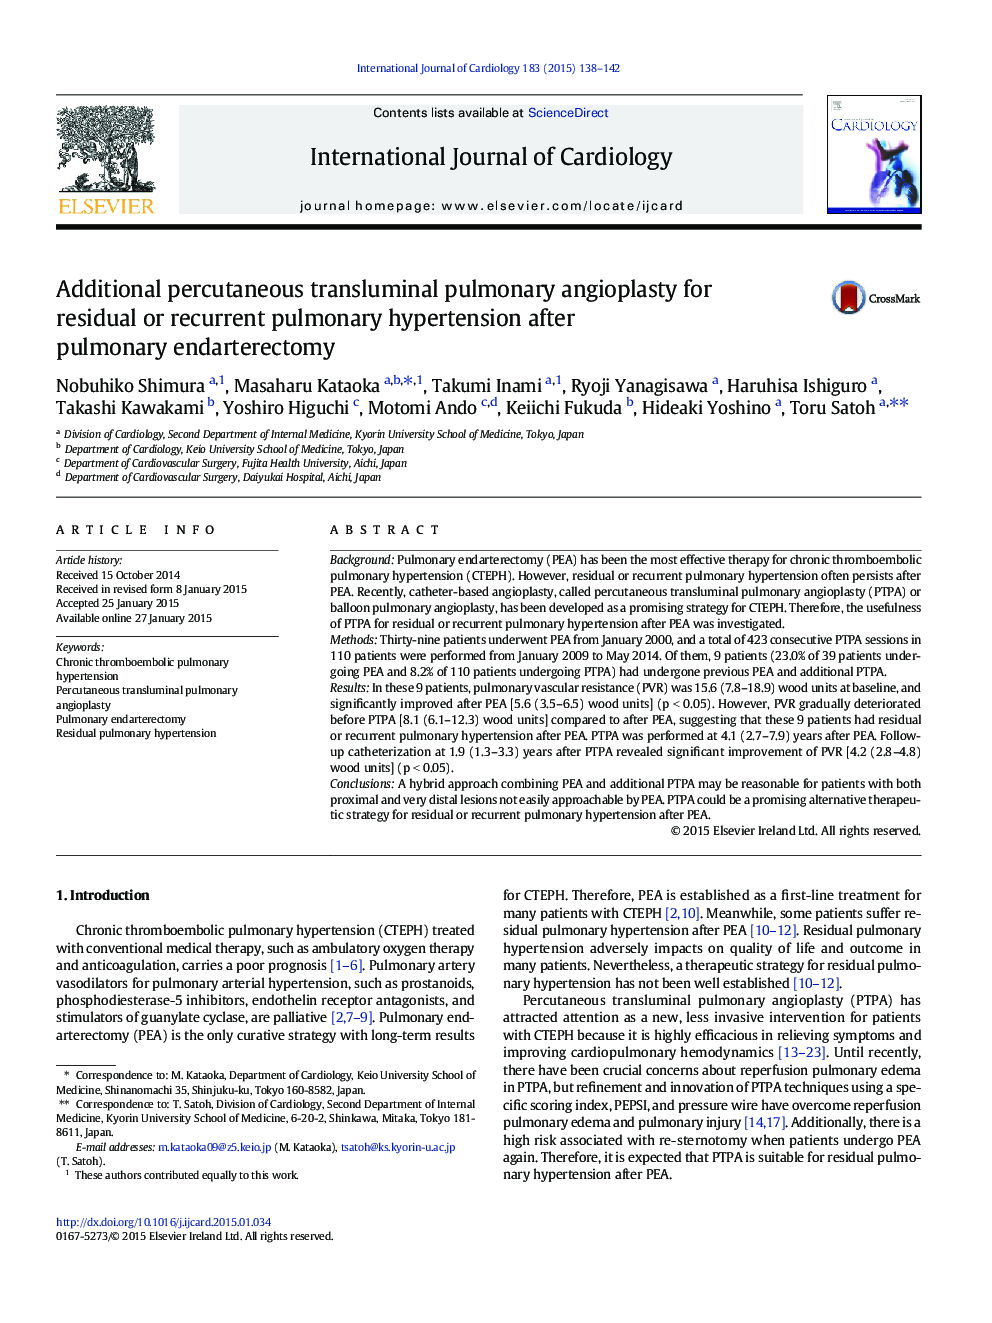 Additional percutaneous transluminal pulmonary angioplasty for residual or recurrent pulmonary hypertension after pulmonary endarterectomy